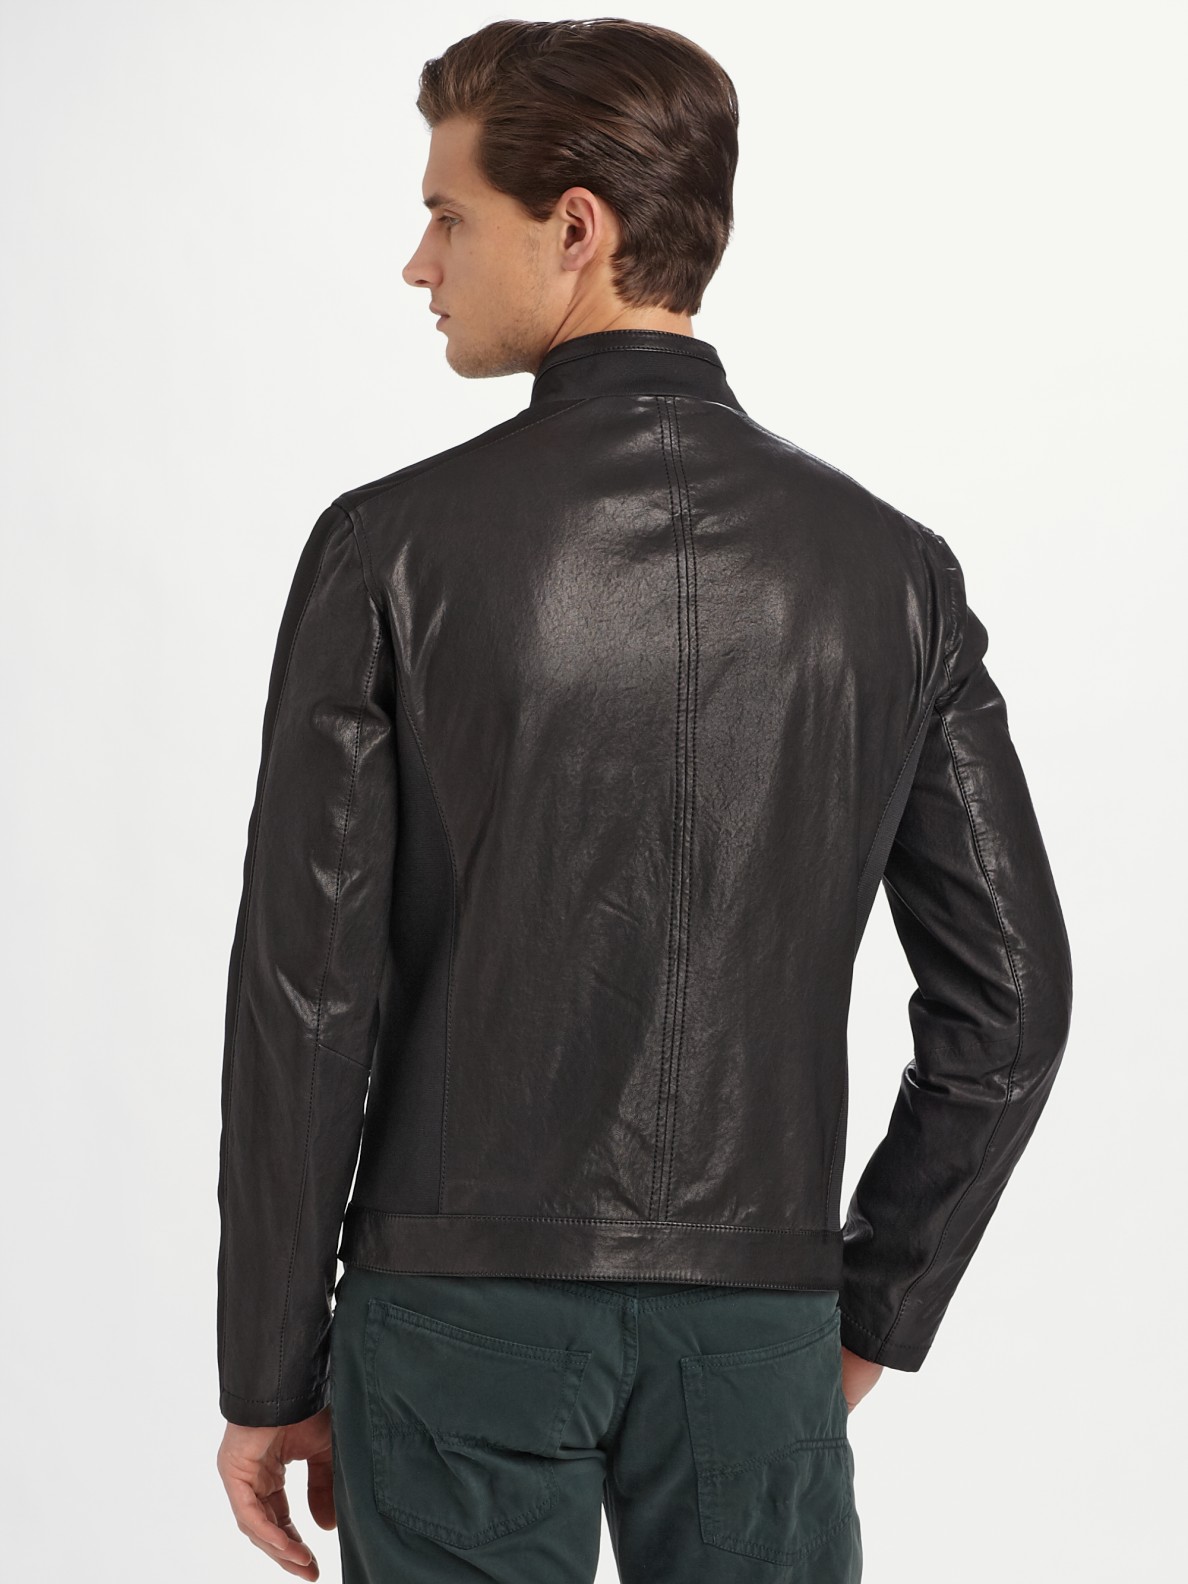 Armani Knit-trim Leather Jacket in Black for Men - Lyst